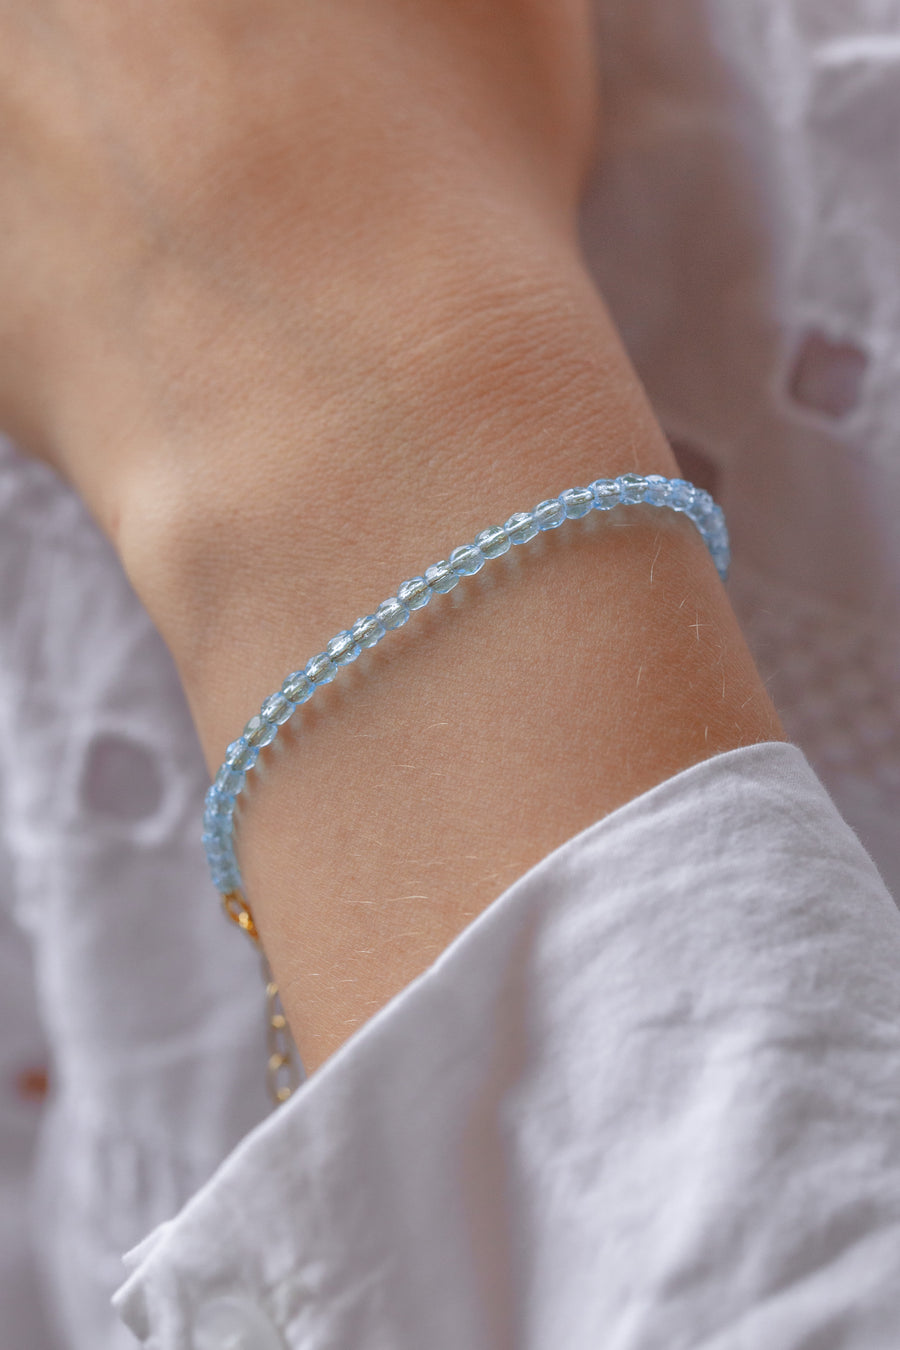 Icy Blue Bracelet